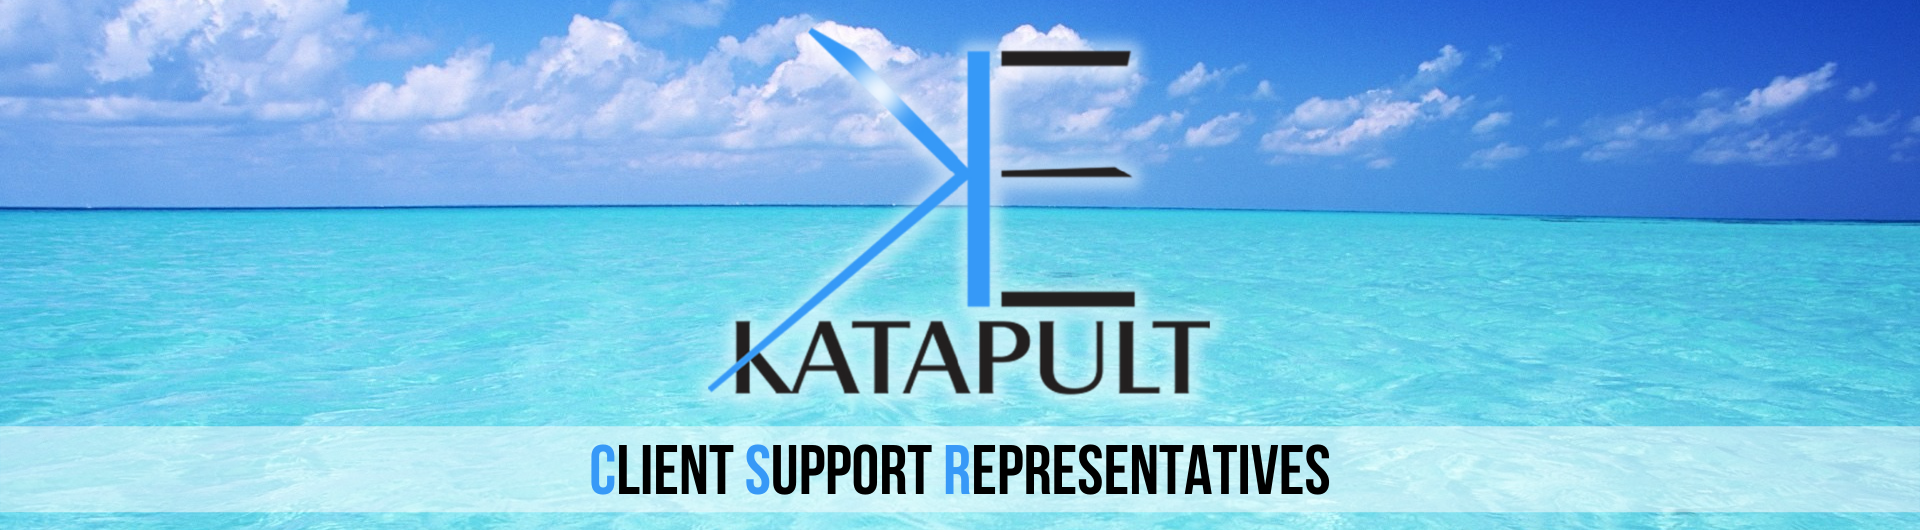 Katapult Client Support Representatives